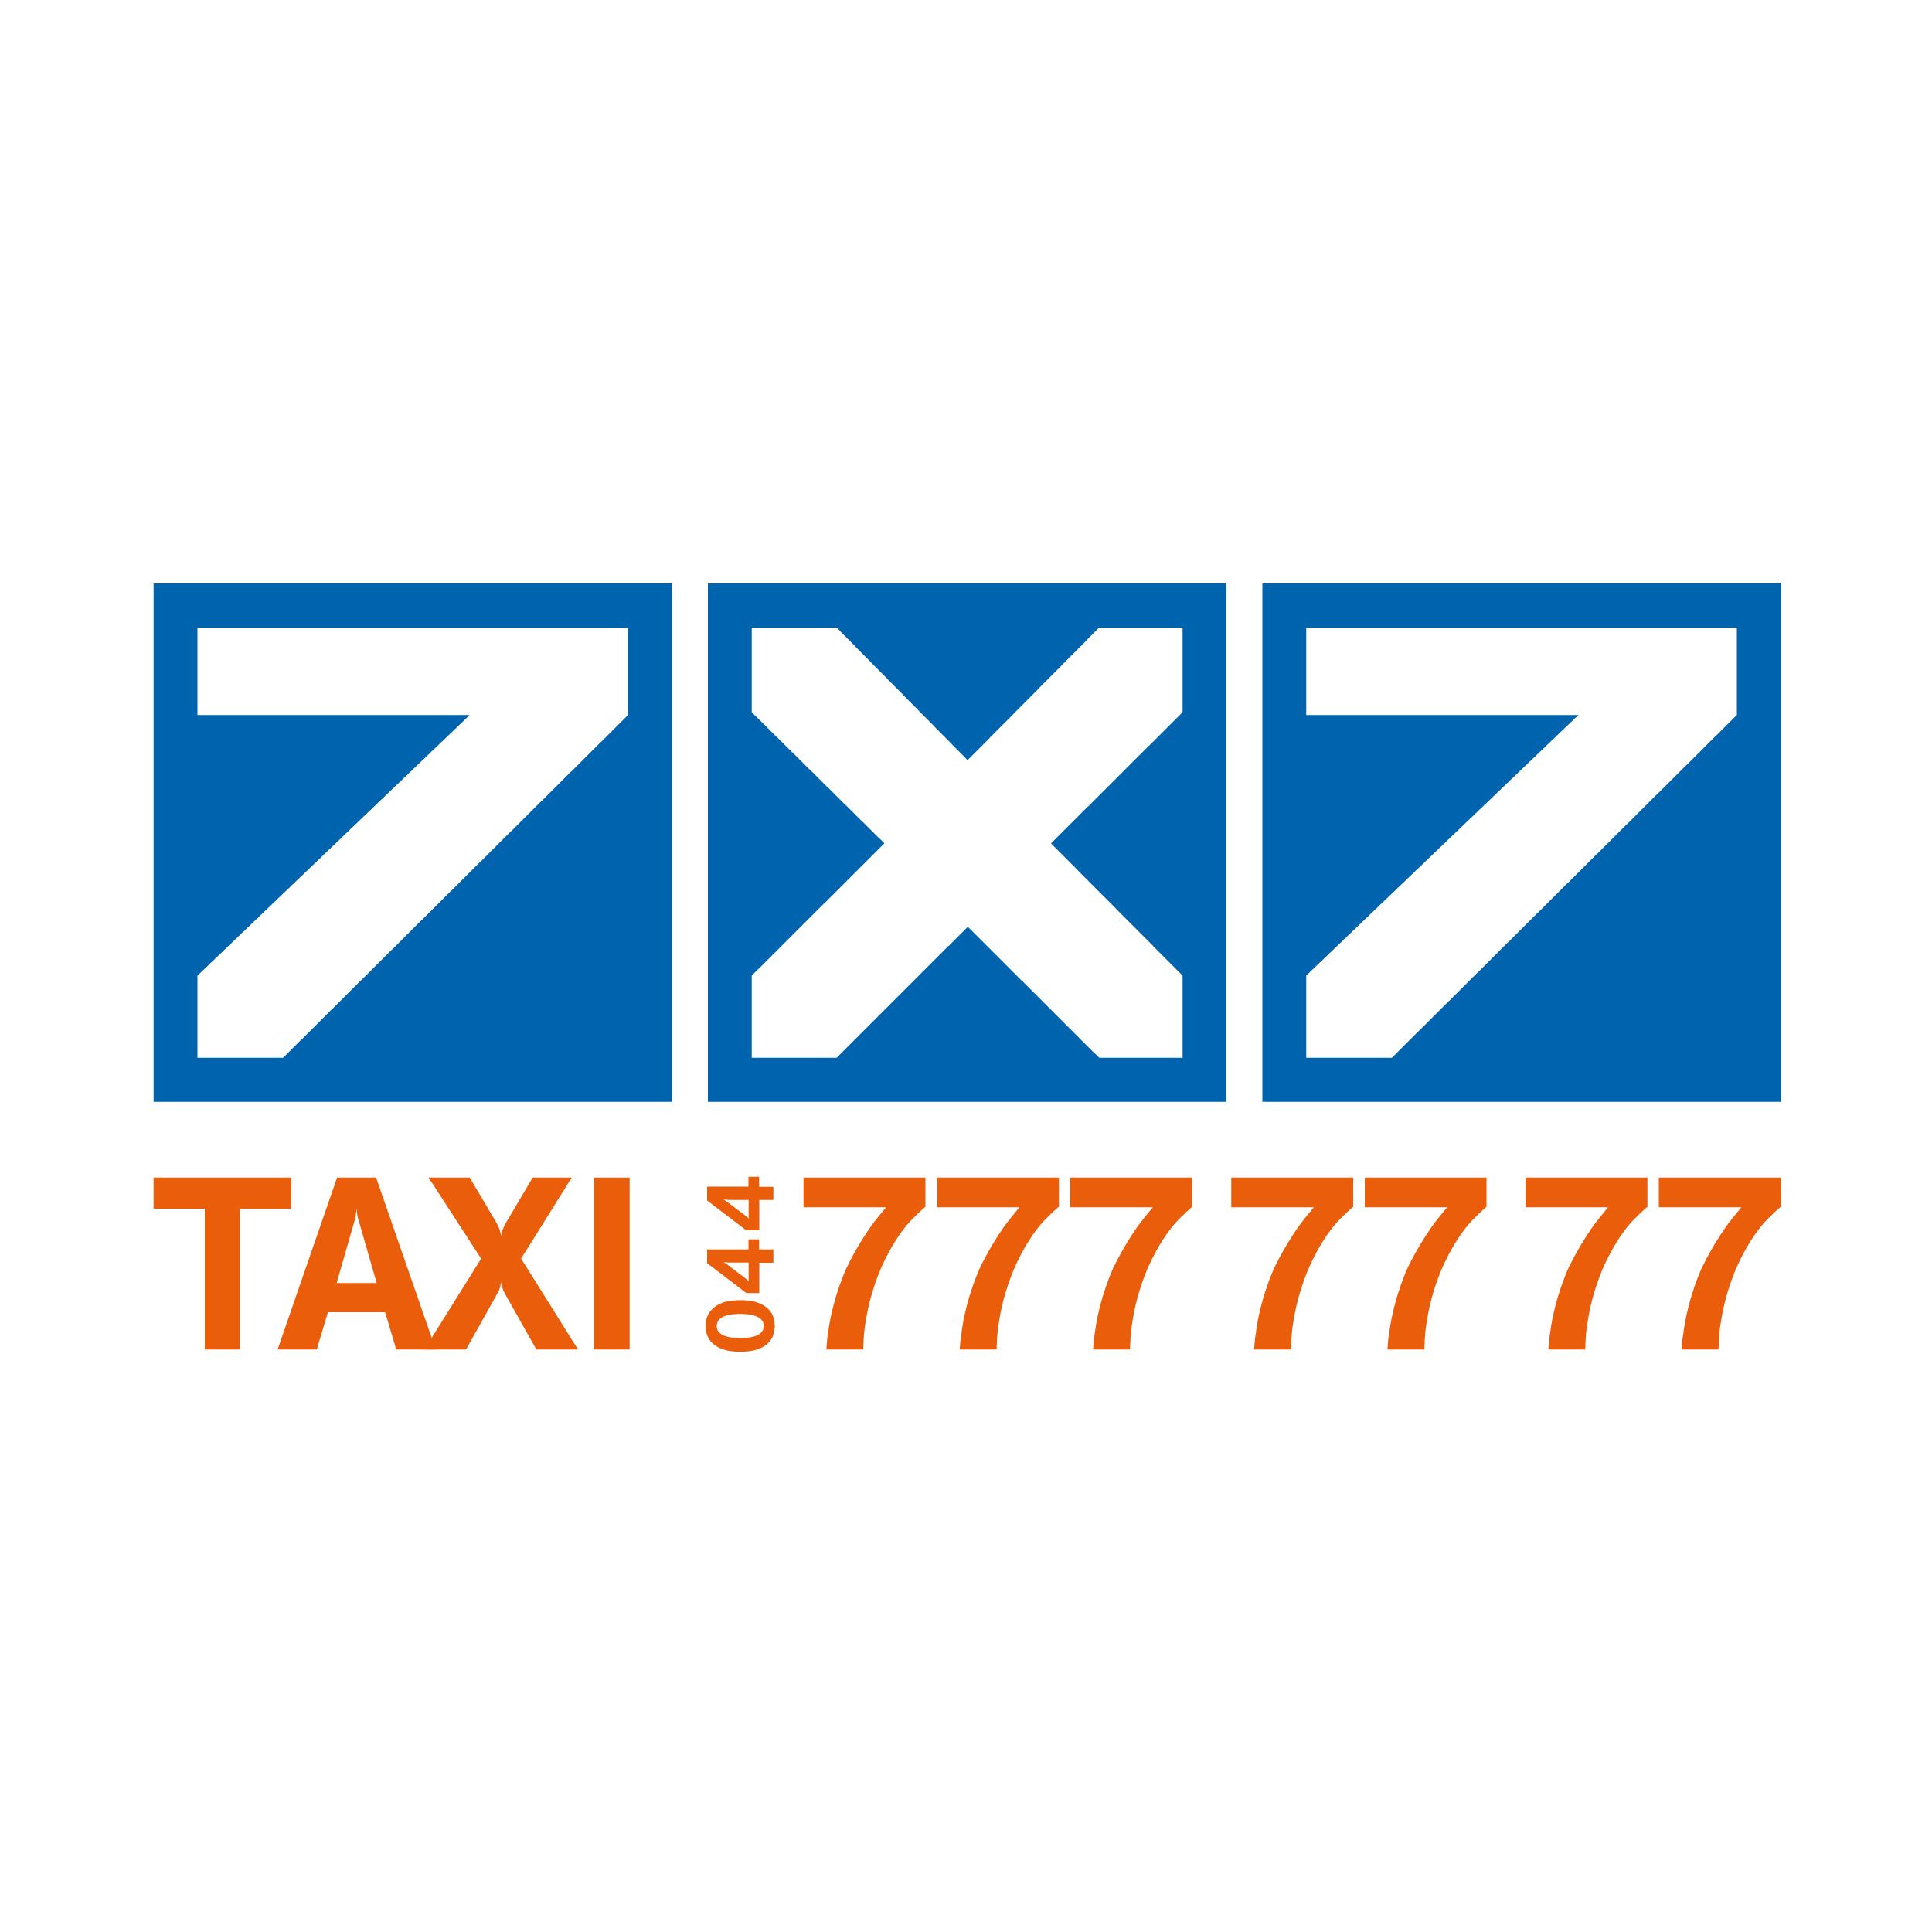 7x7 Taxi